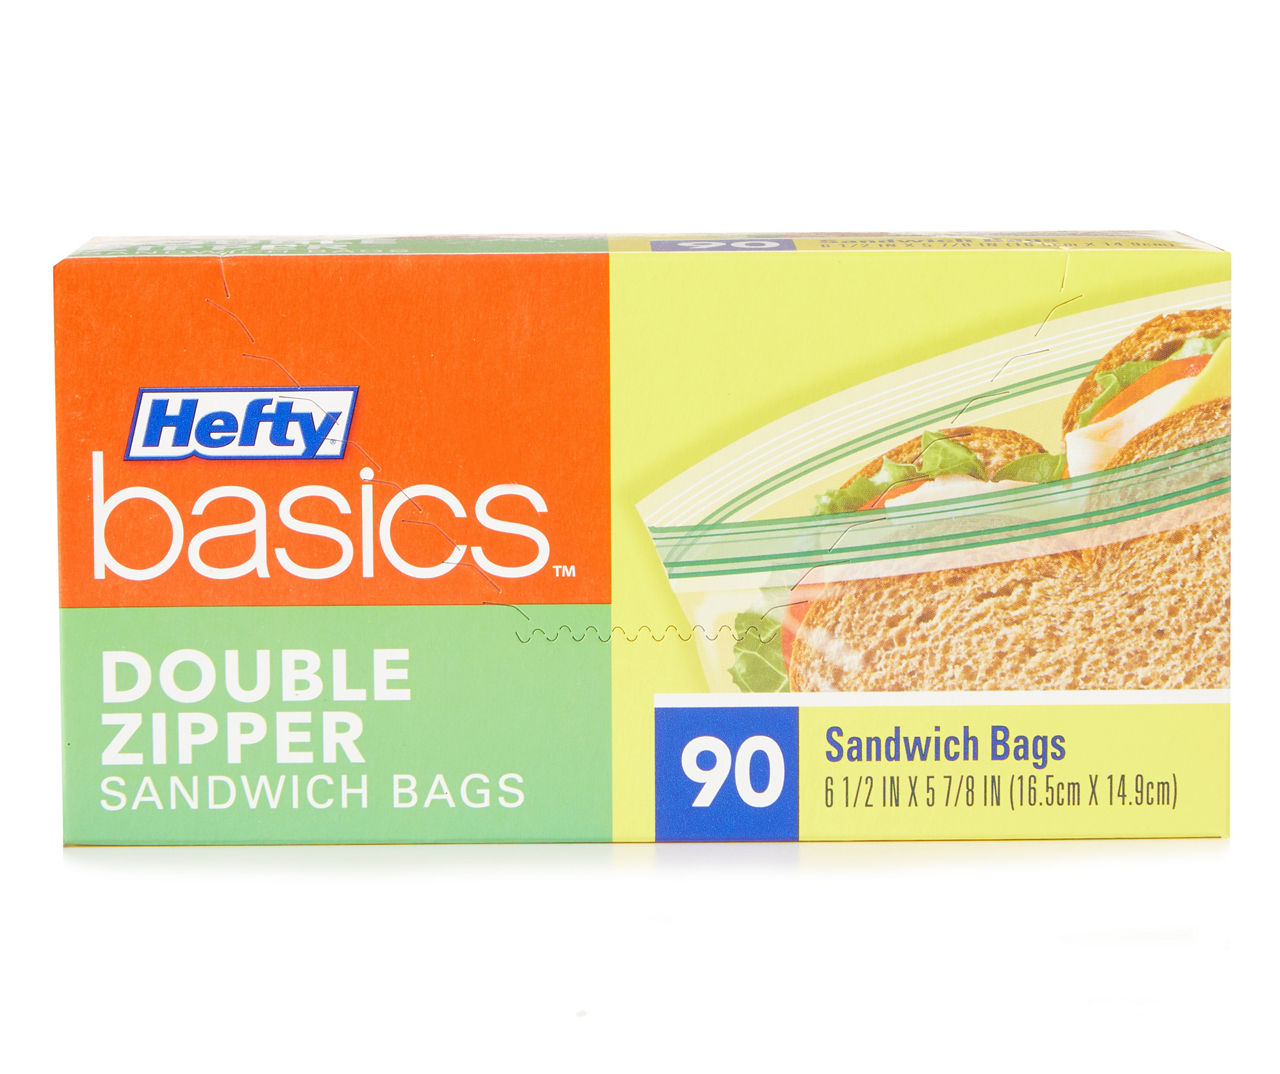 Vintage Baggies Sandwich Bags 1996-2000 Sealed Prop Boxes